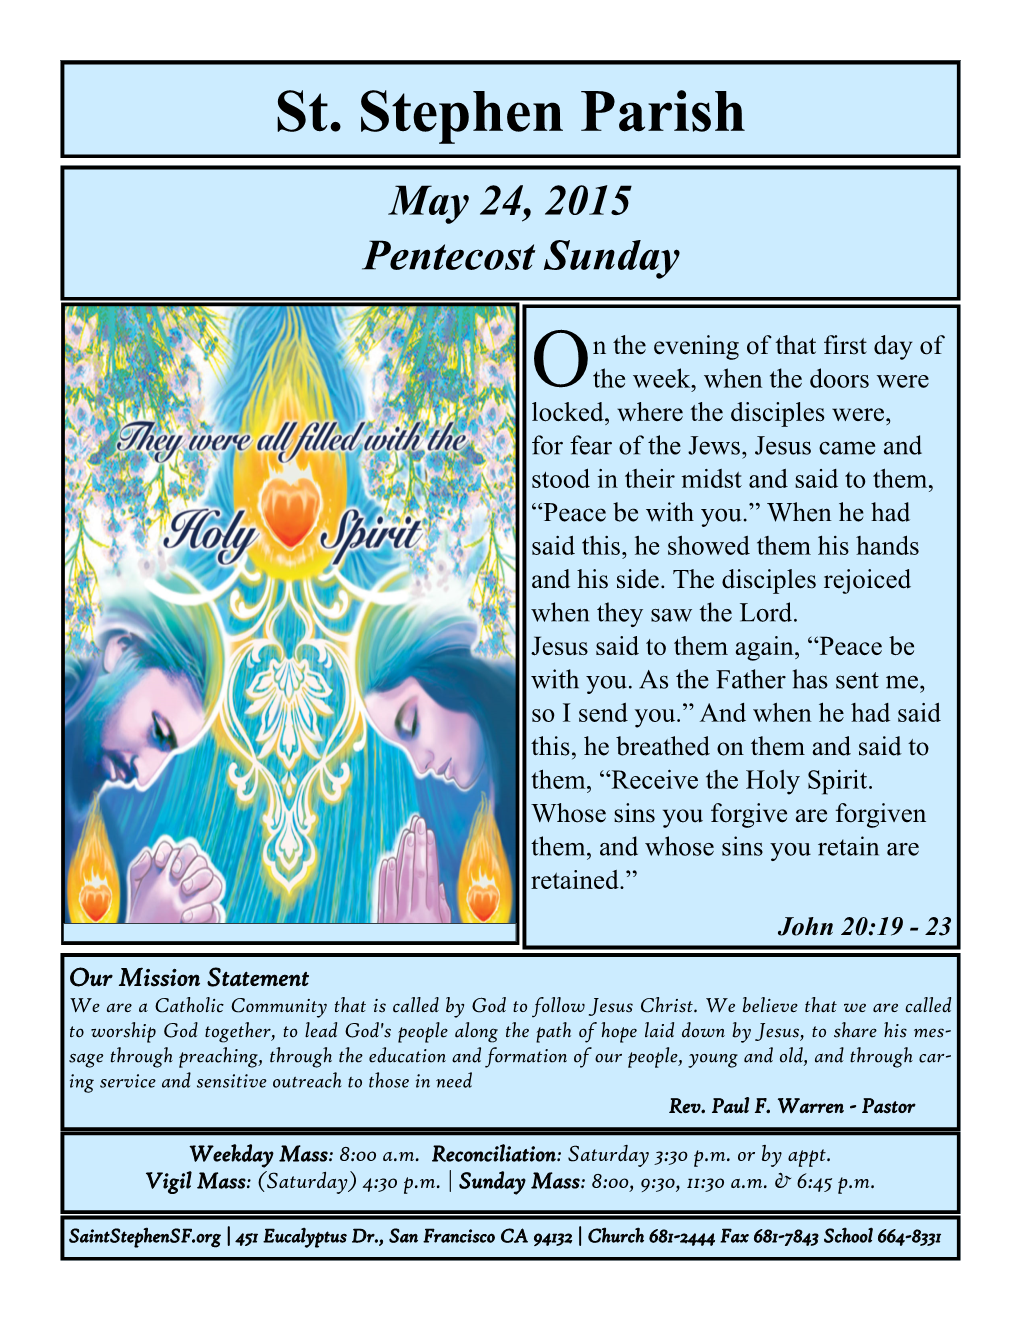 St. Stephen Parish May 24, 2015 Pentecost Sunday